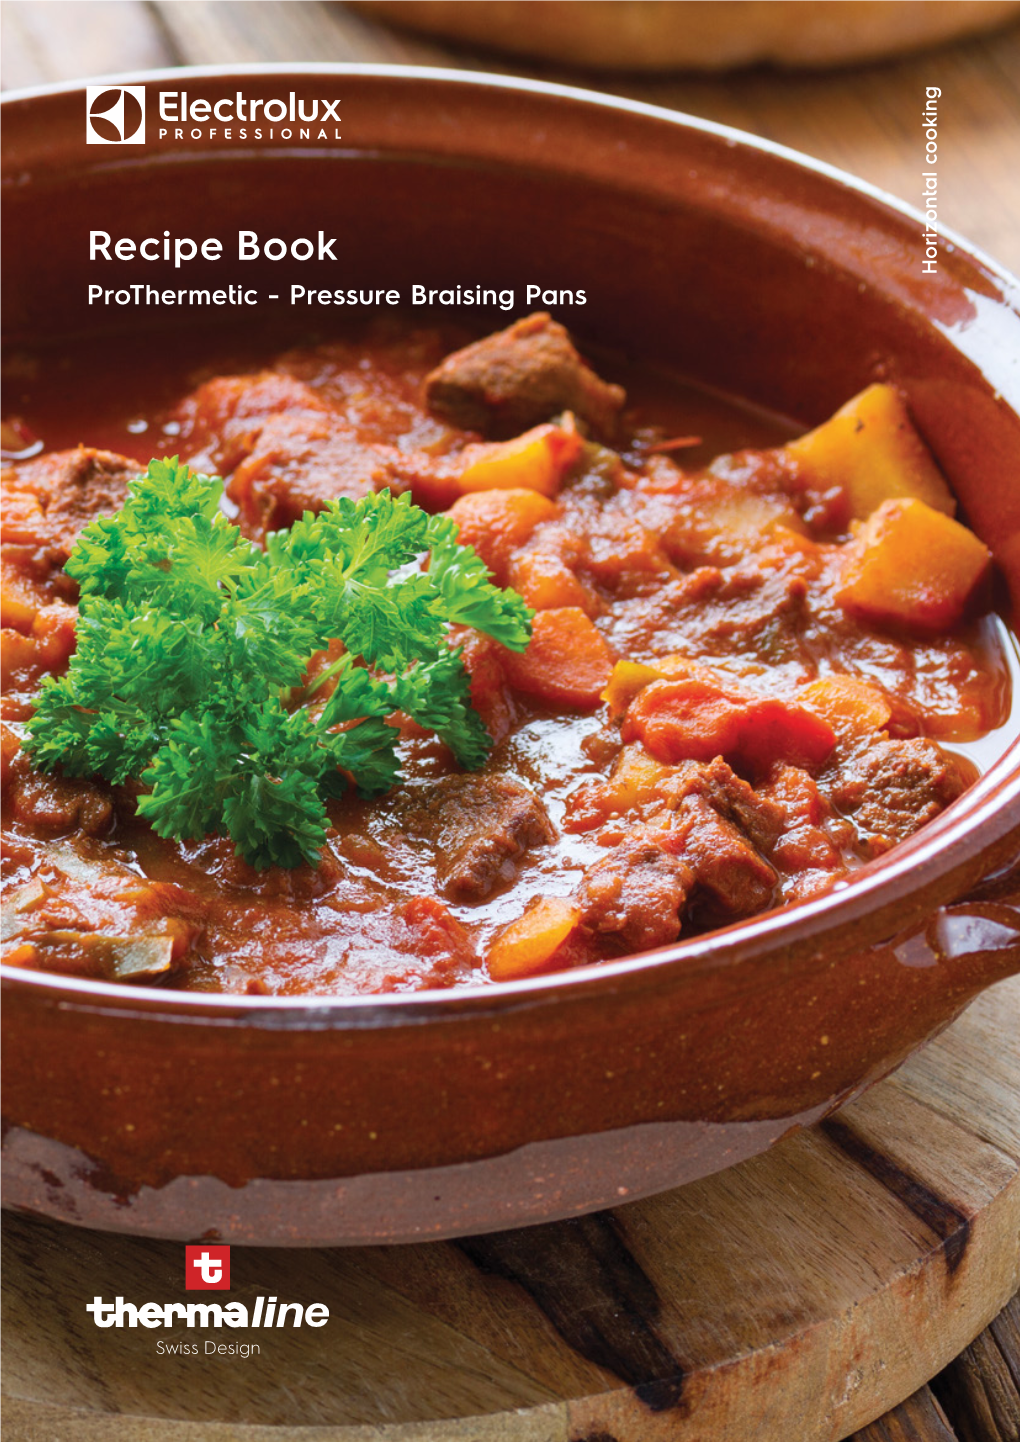 Recipe Book Horizontal Cooking Horizontal Prothermetic - Pressure Braising Pans